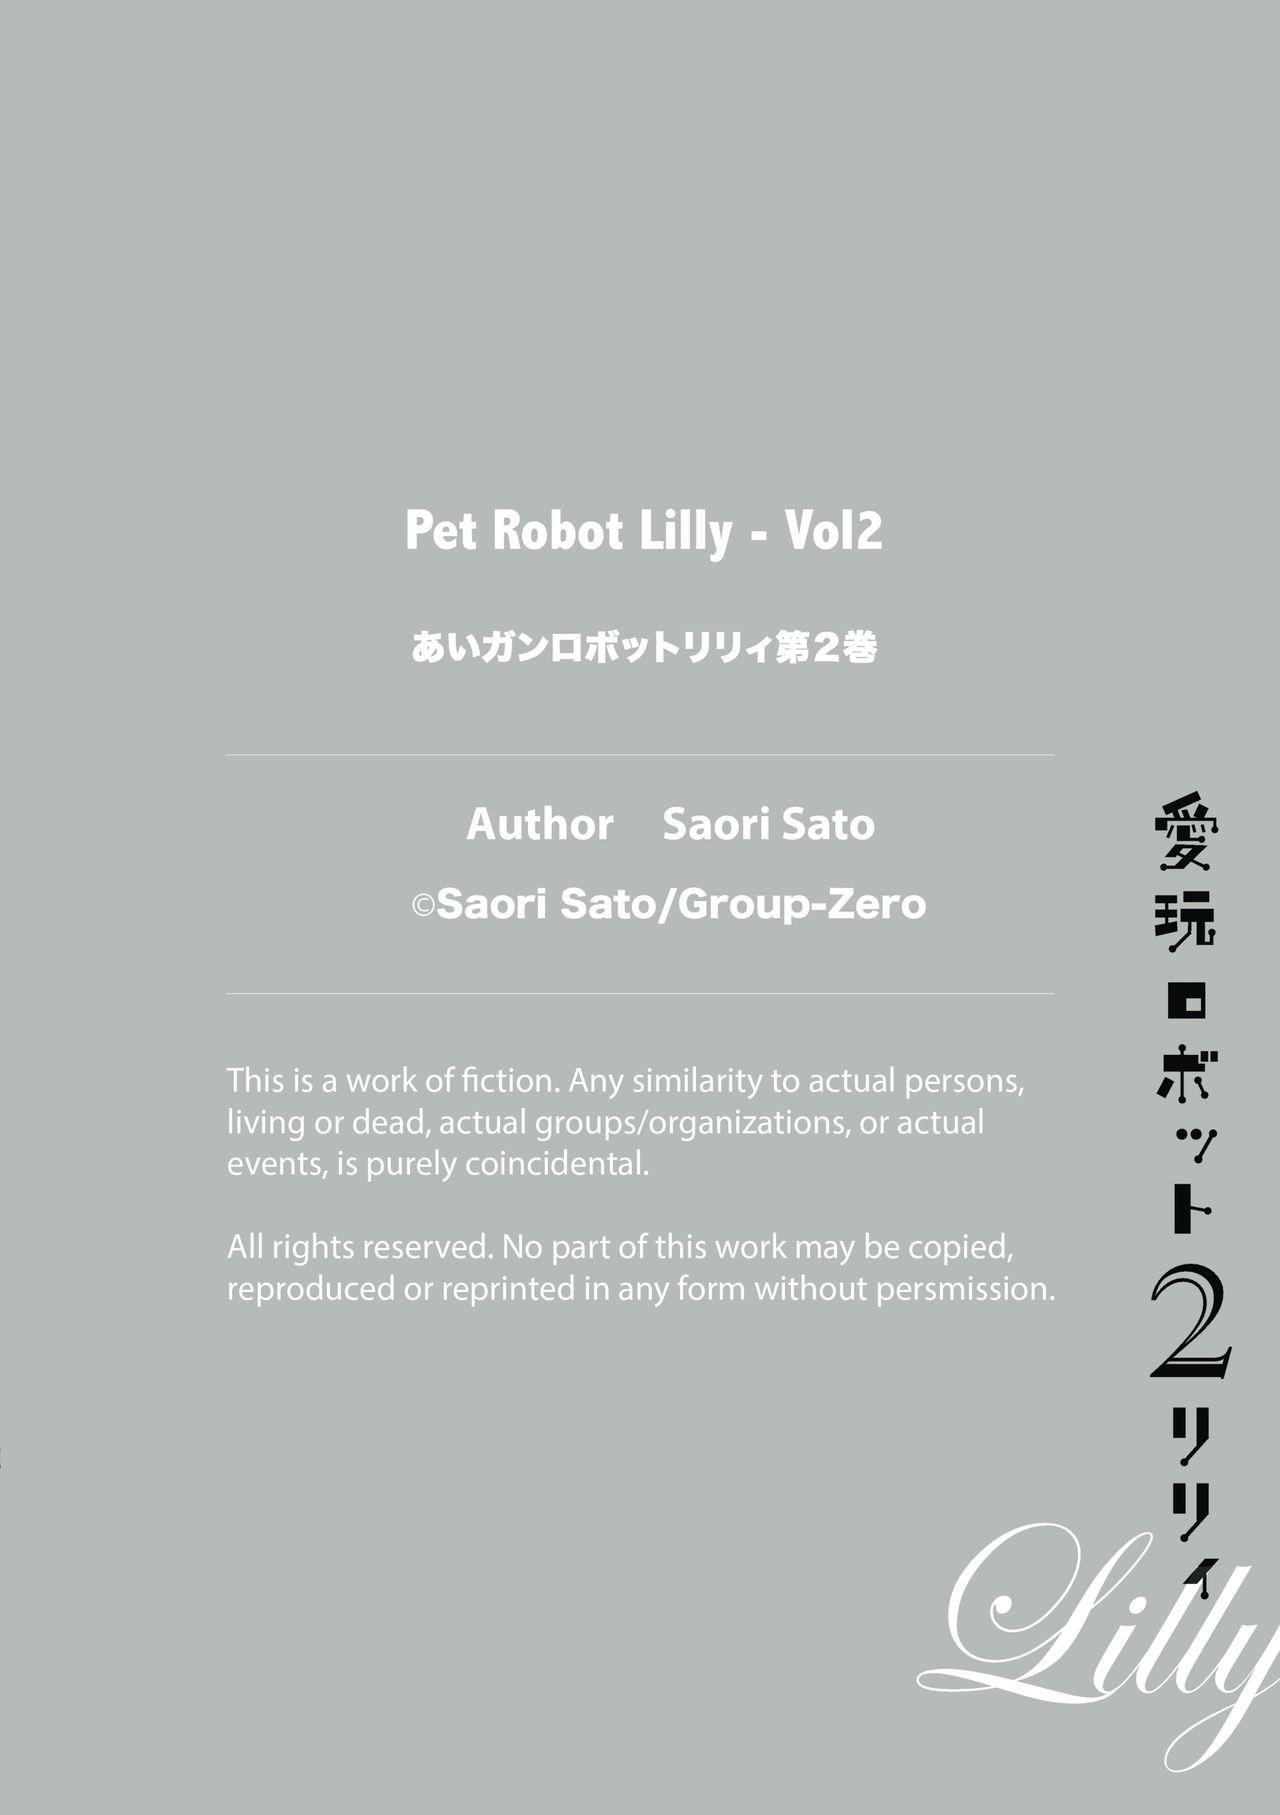 Aigan Robot Lilly - Pet Robot Lilly Vol. 2 151